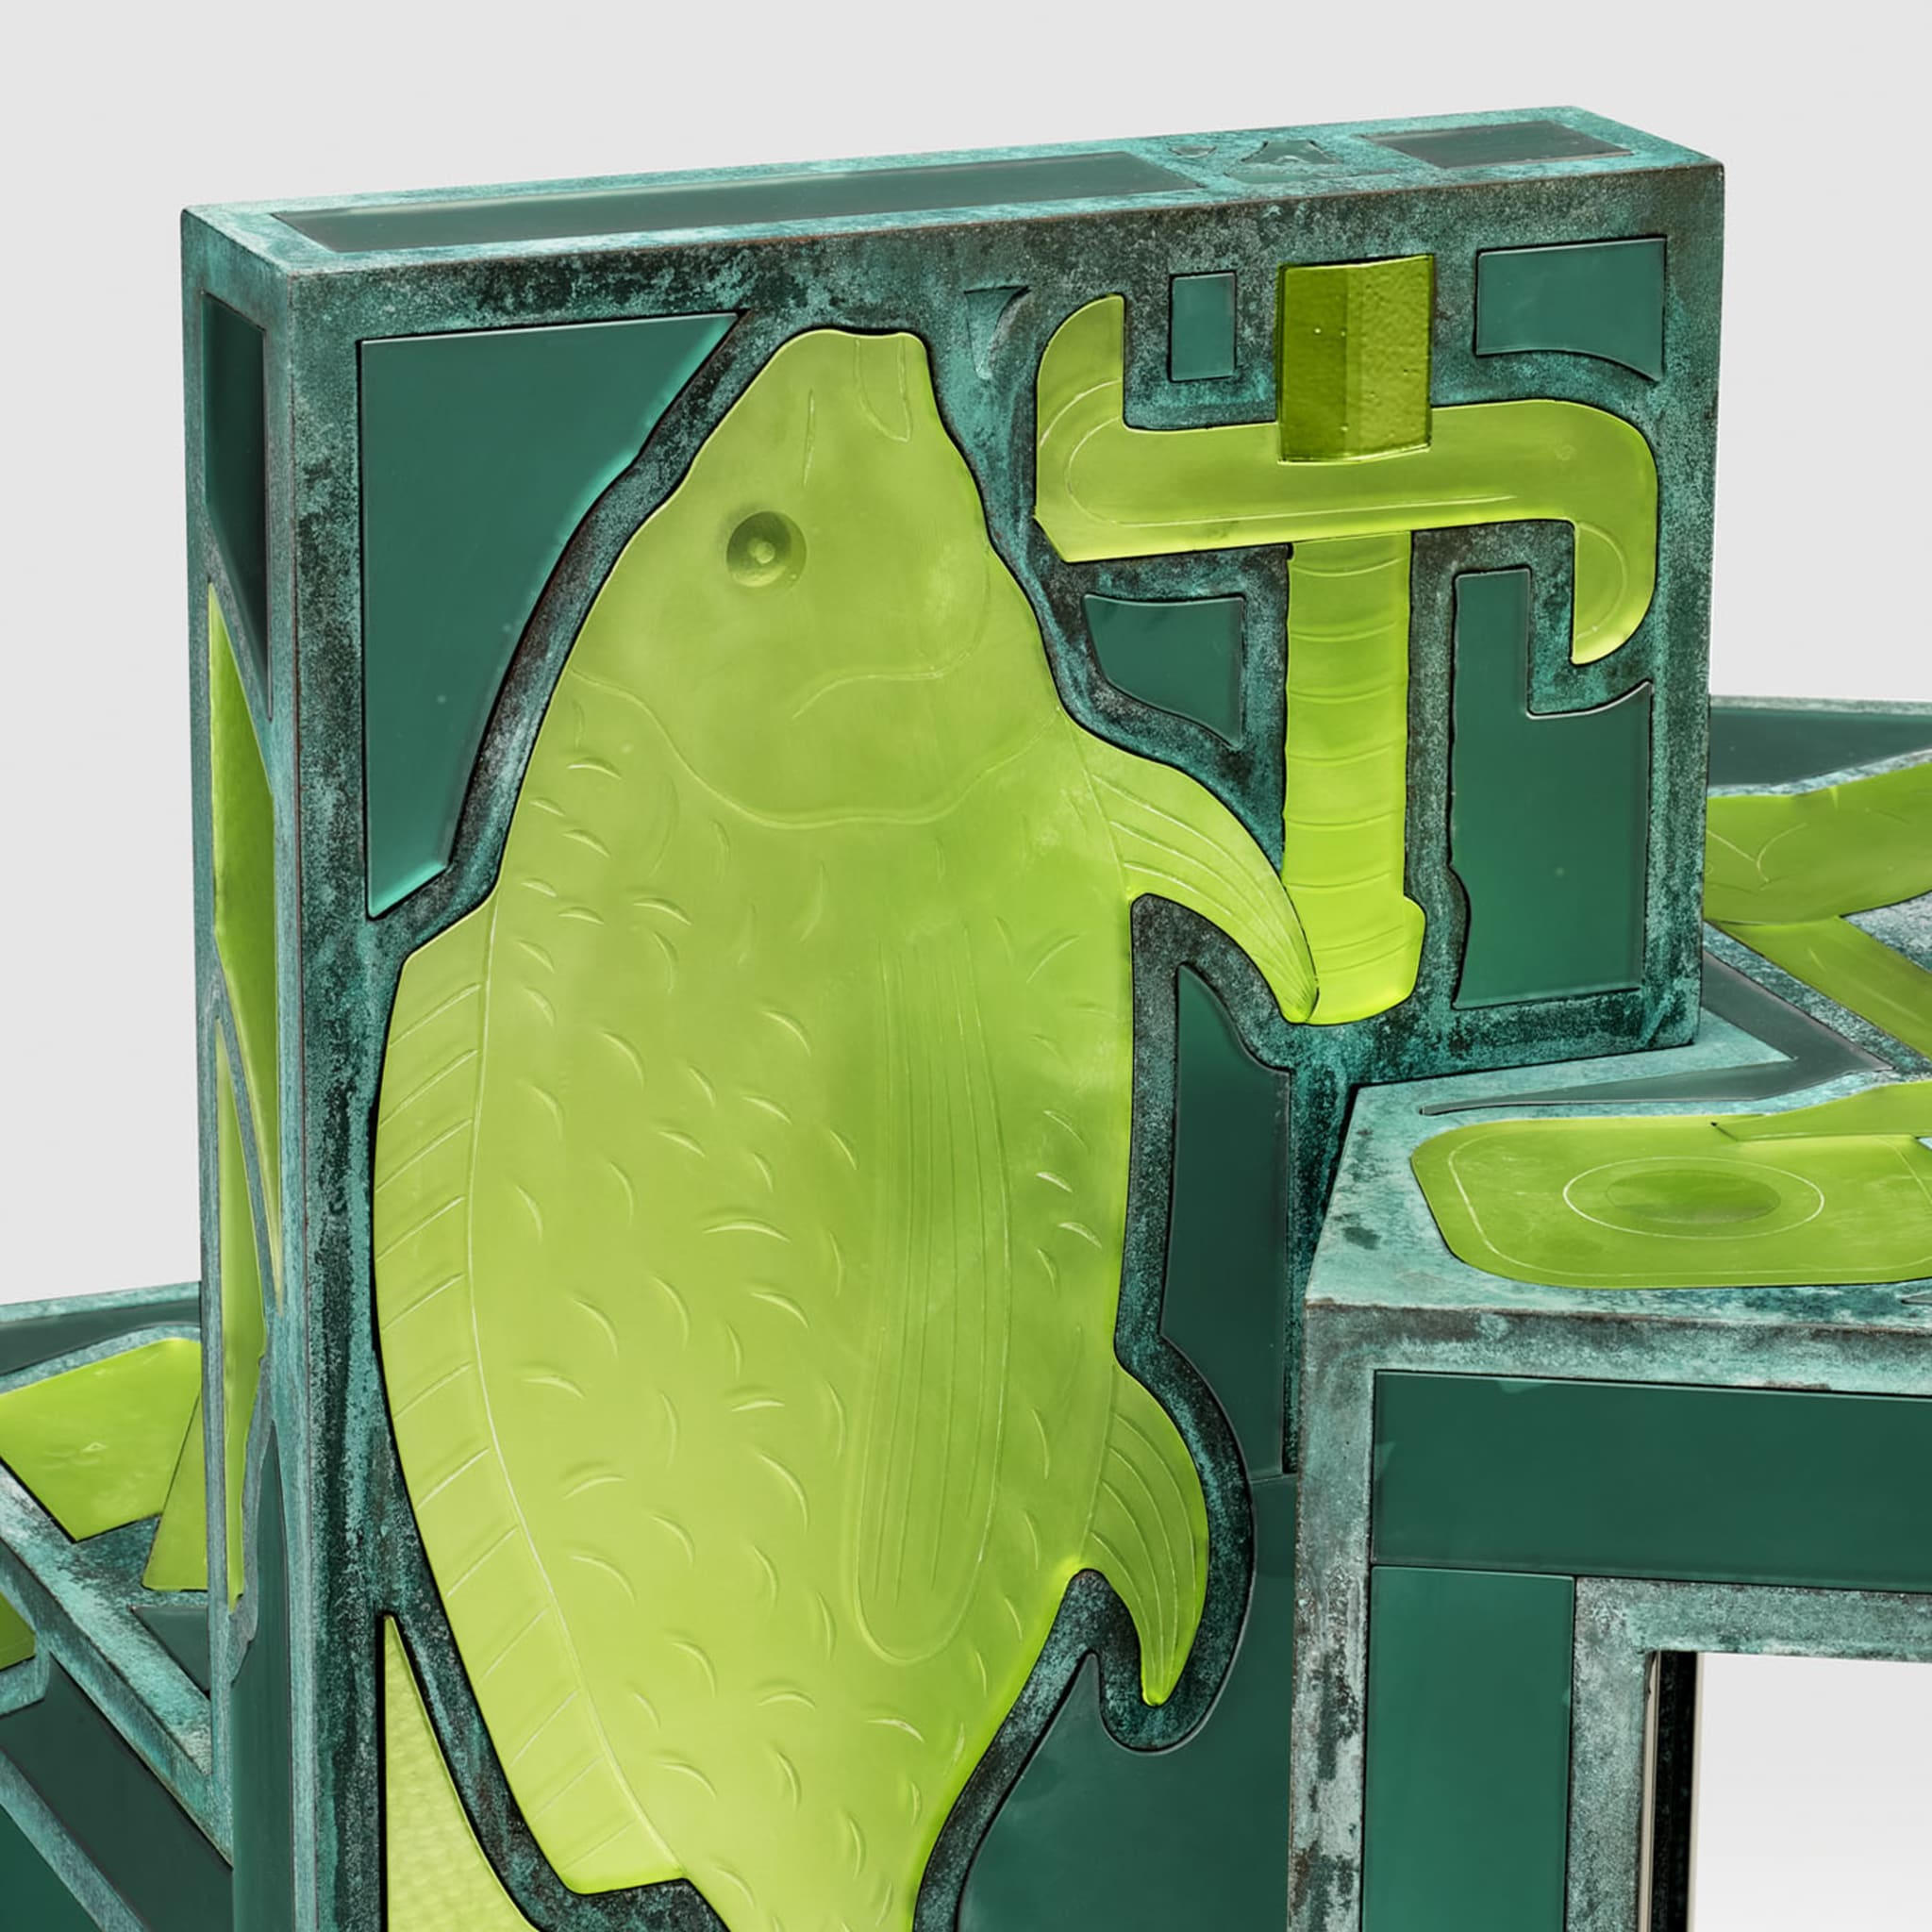 Past Green Chair By Leo De Carlo - Alternative view 1